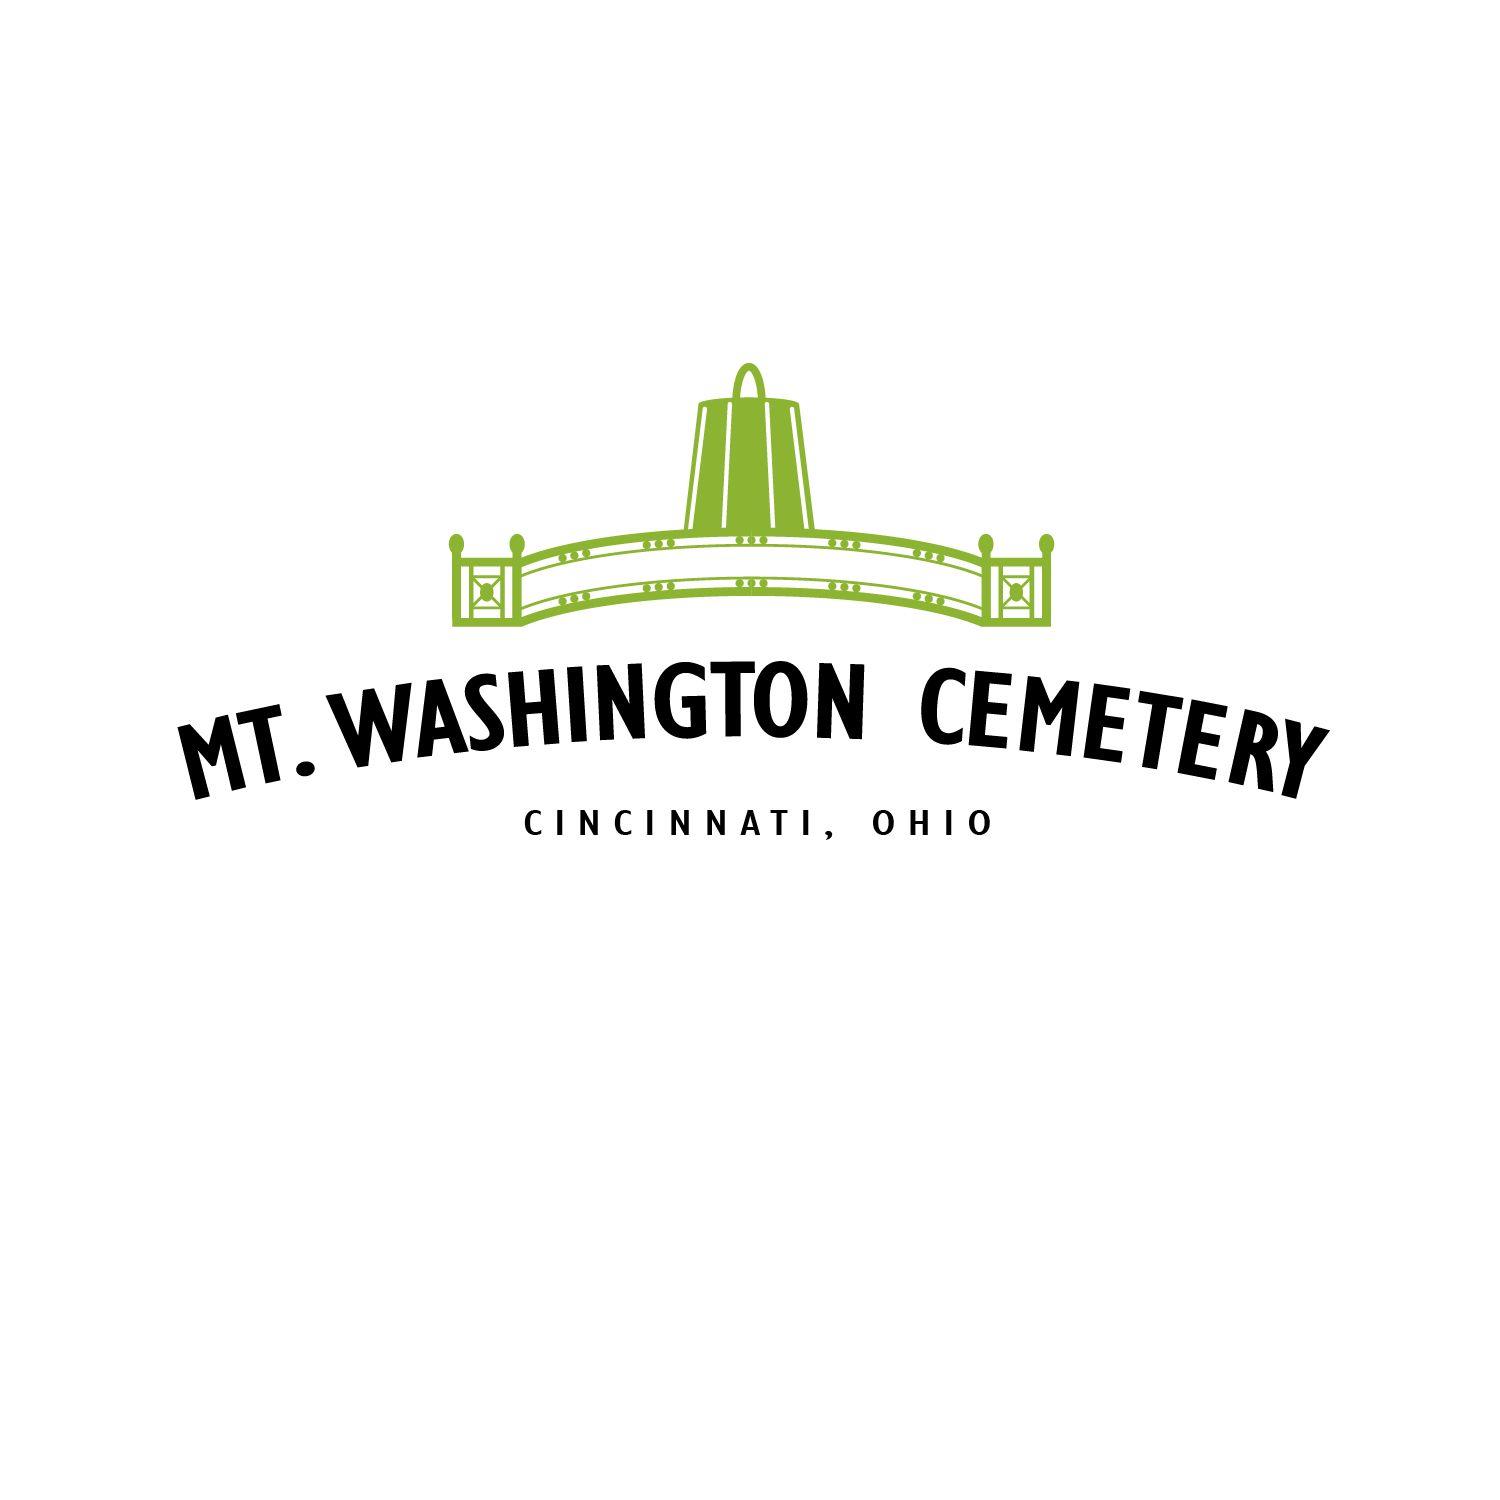 Cemetery Logo - Mt. Washington Cemetery | CemeteryIndex.com